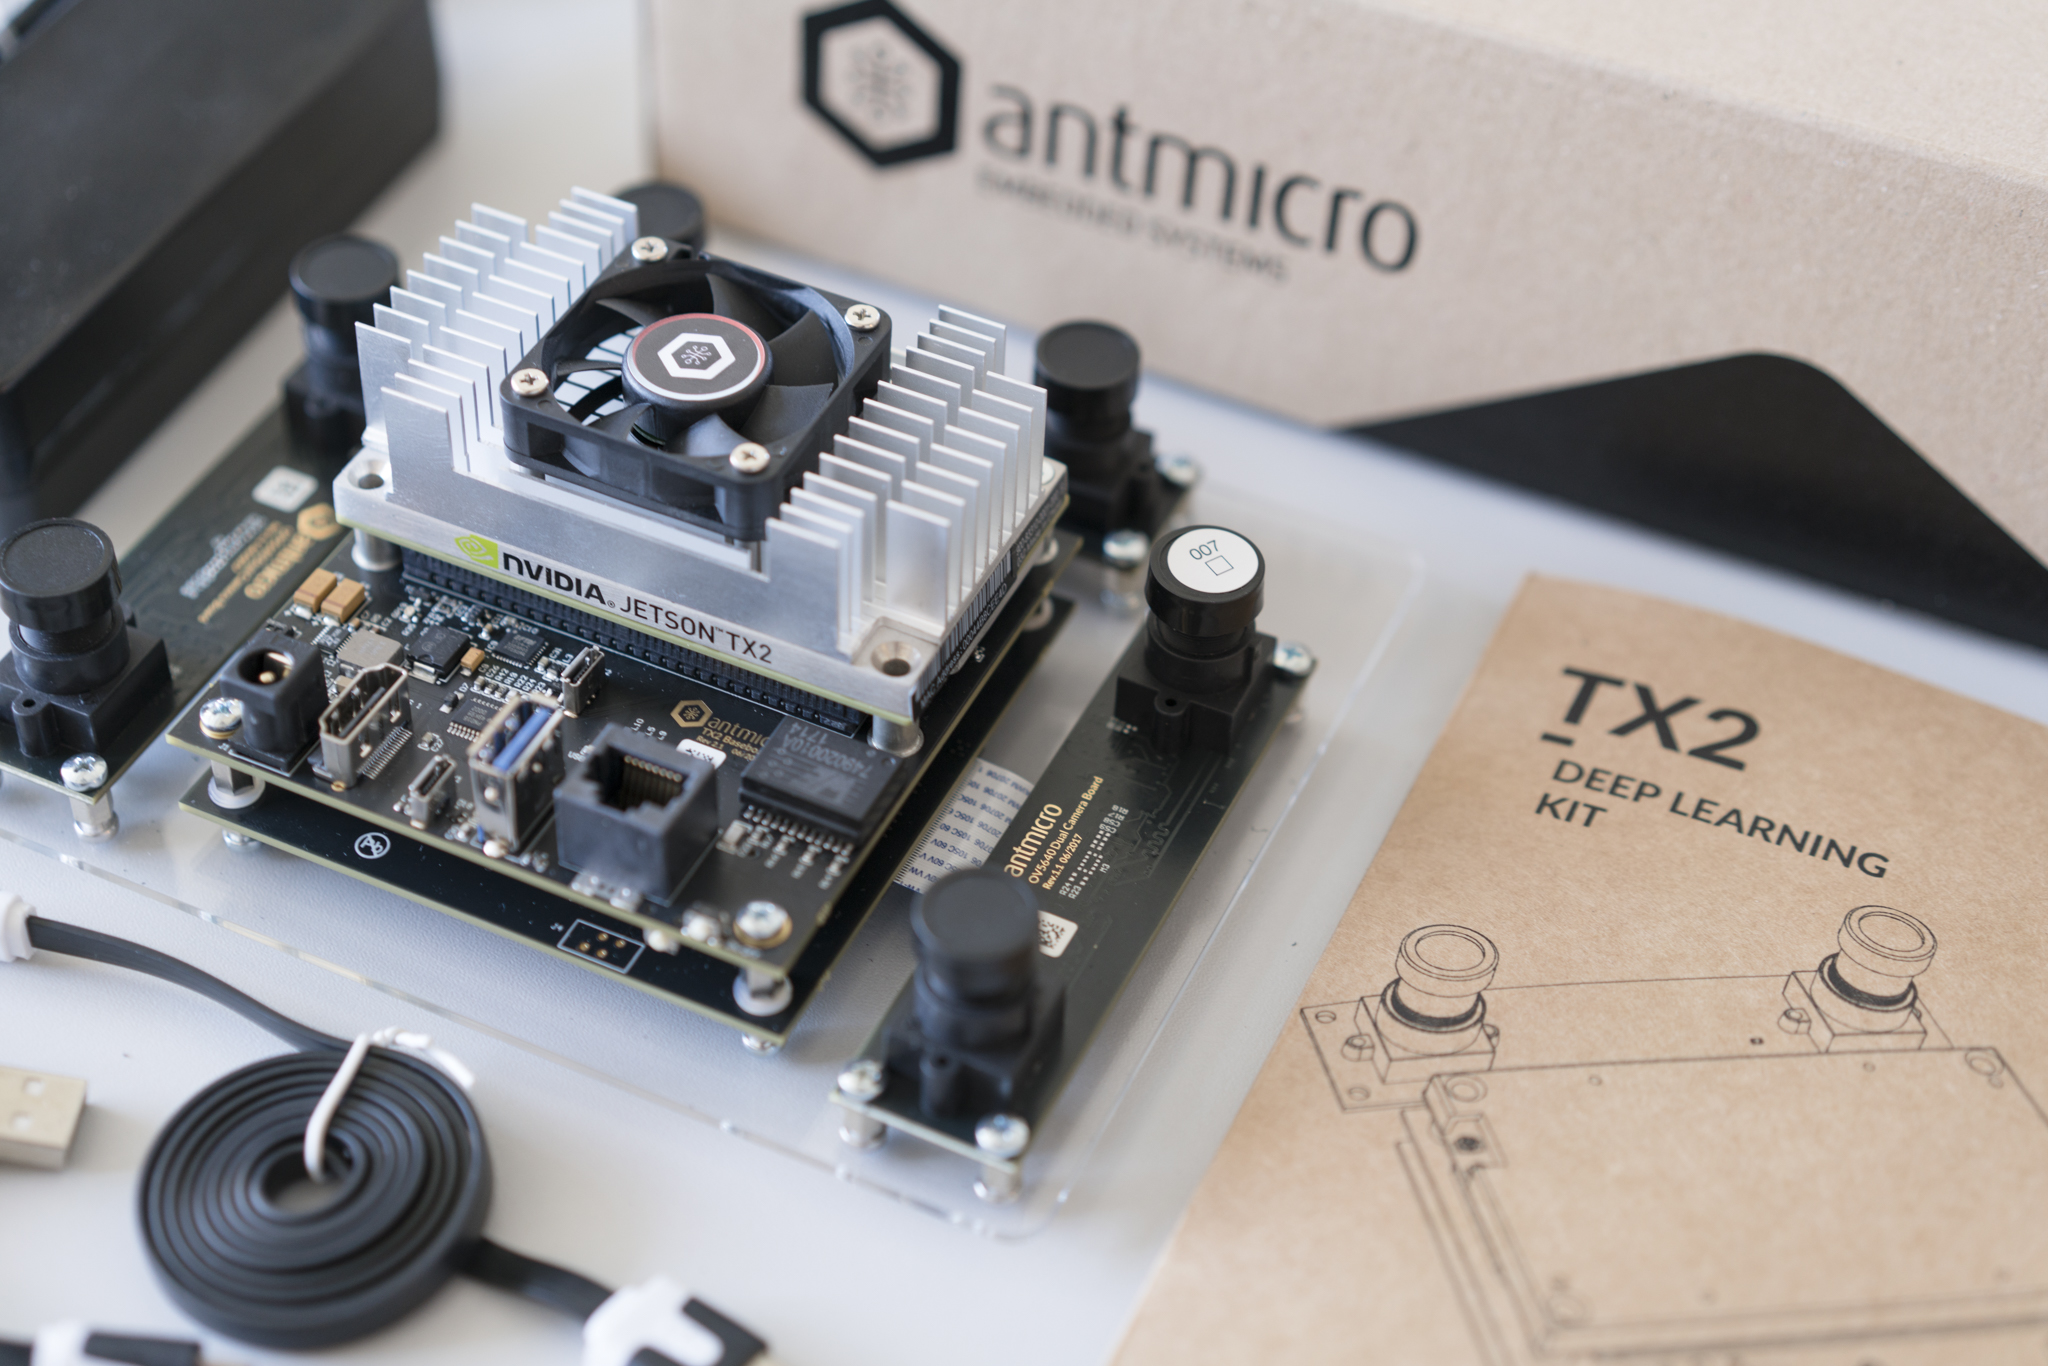 Antmicro TX1/TX2 Deep Learning Kit box